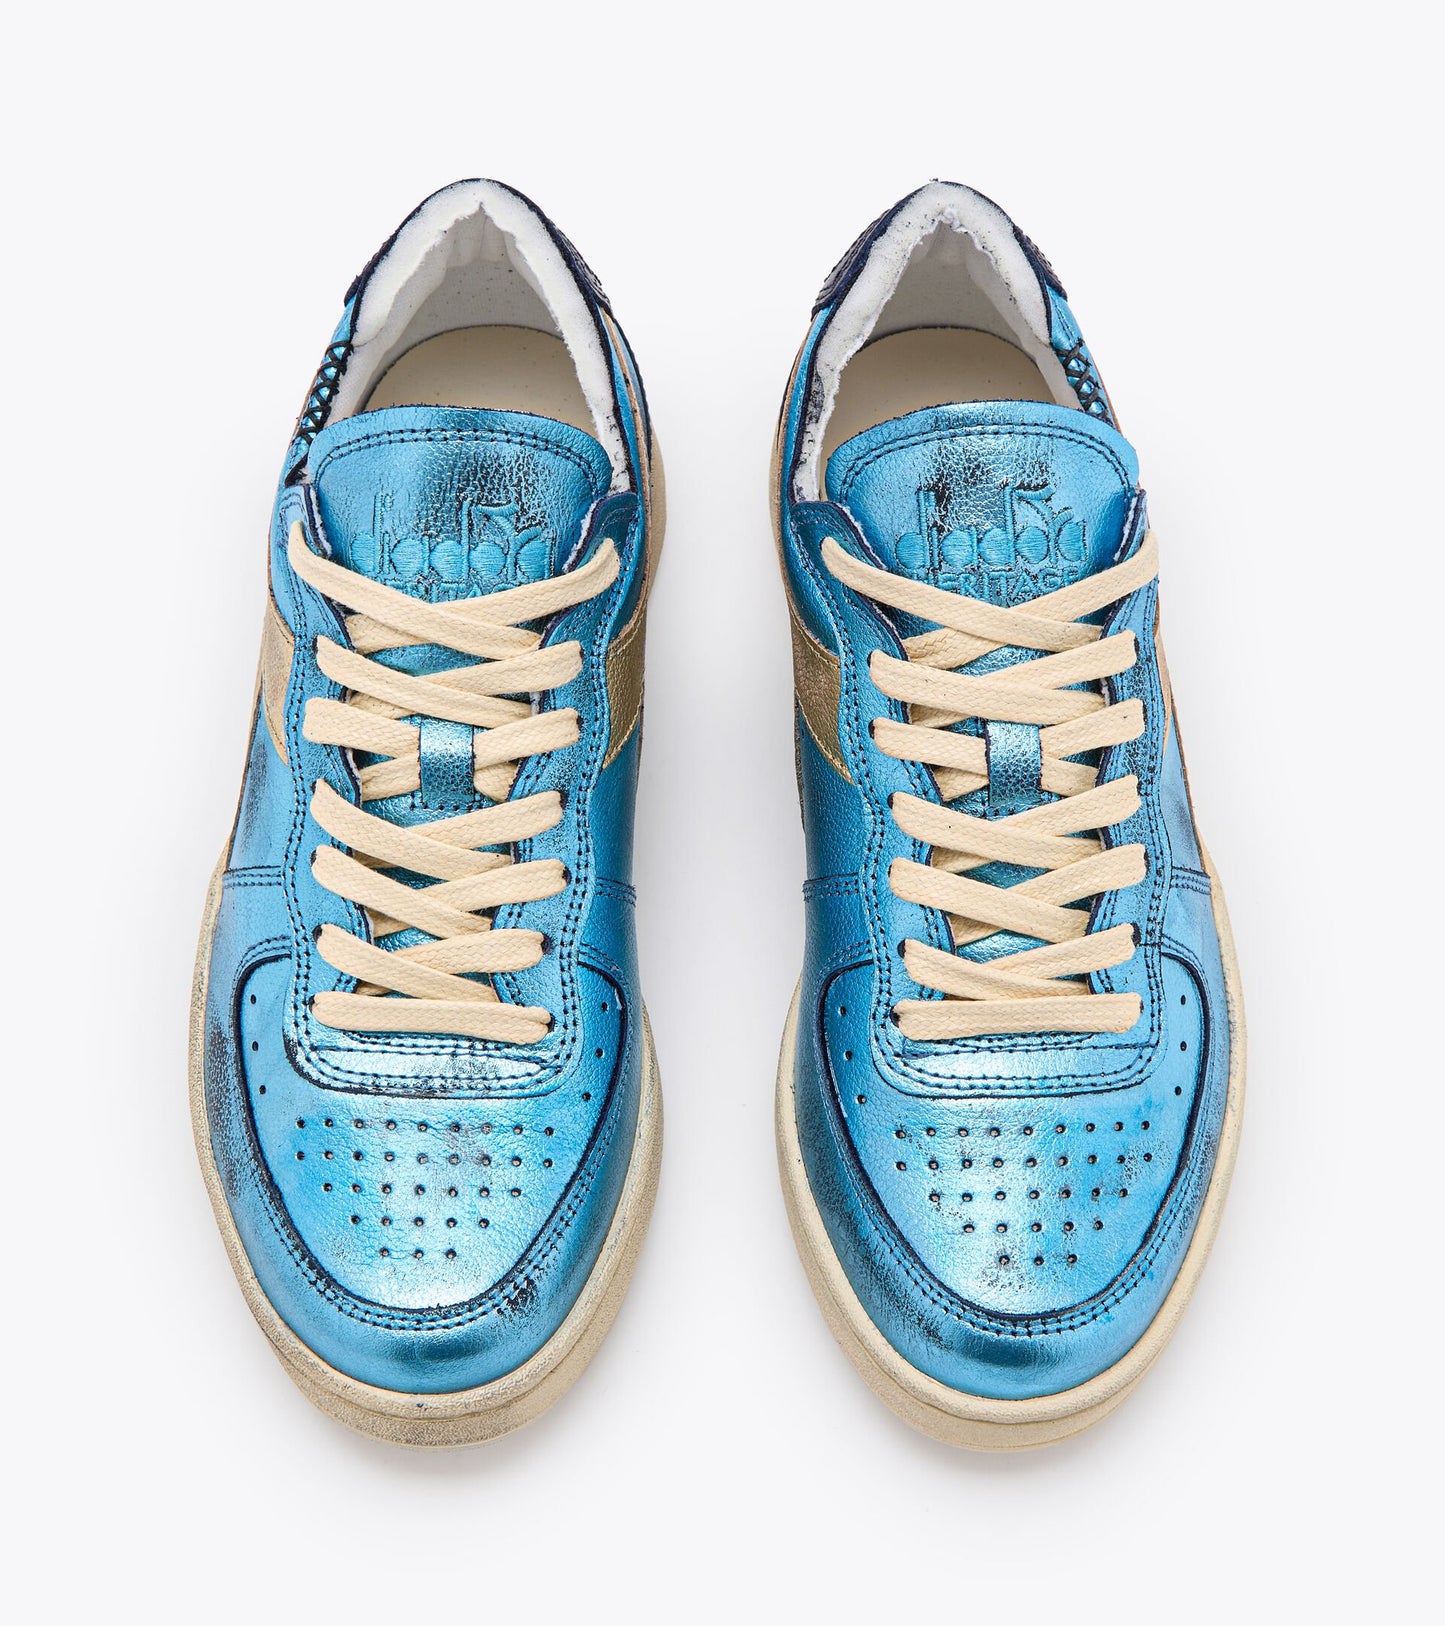 Diadora sneakers MI baskets row cut blue metallic leather